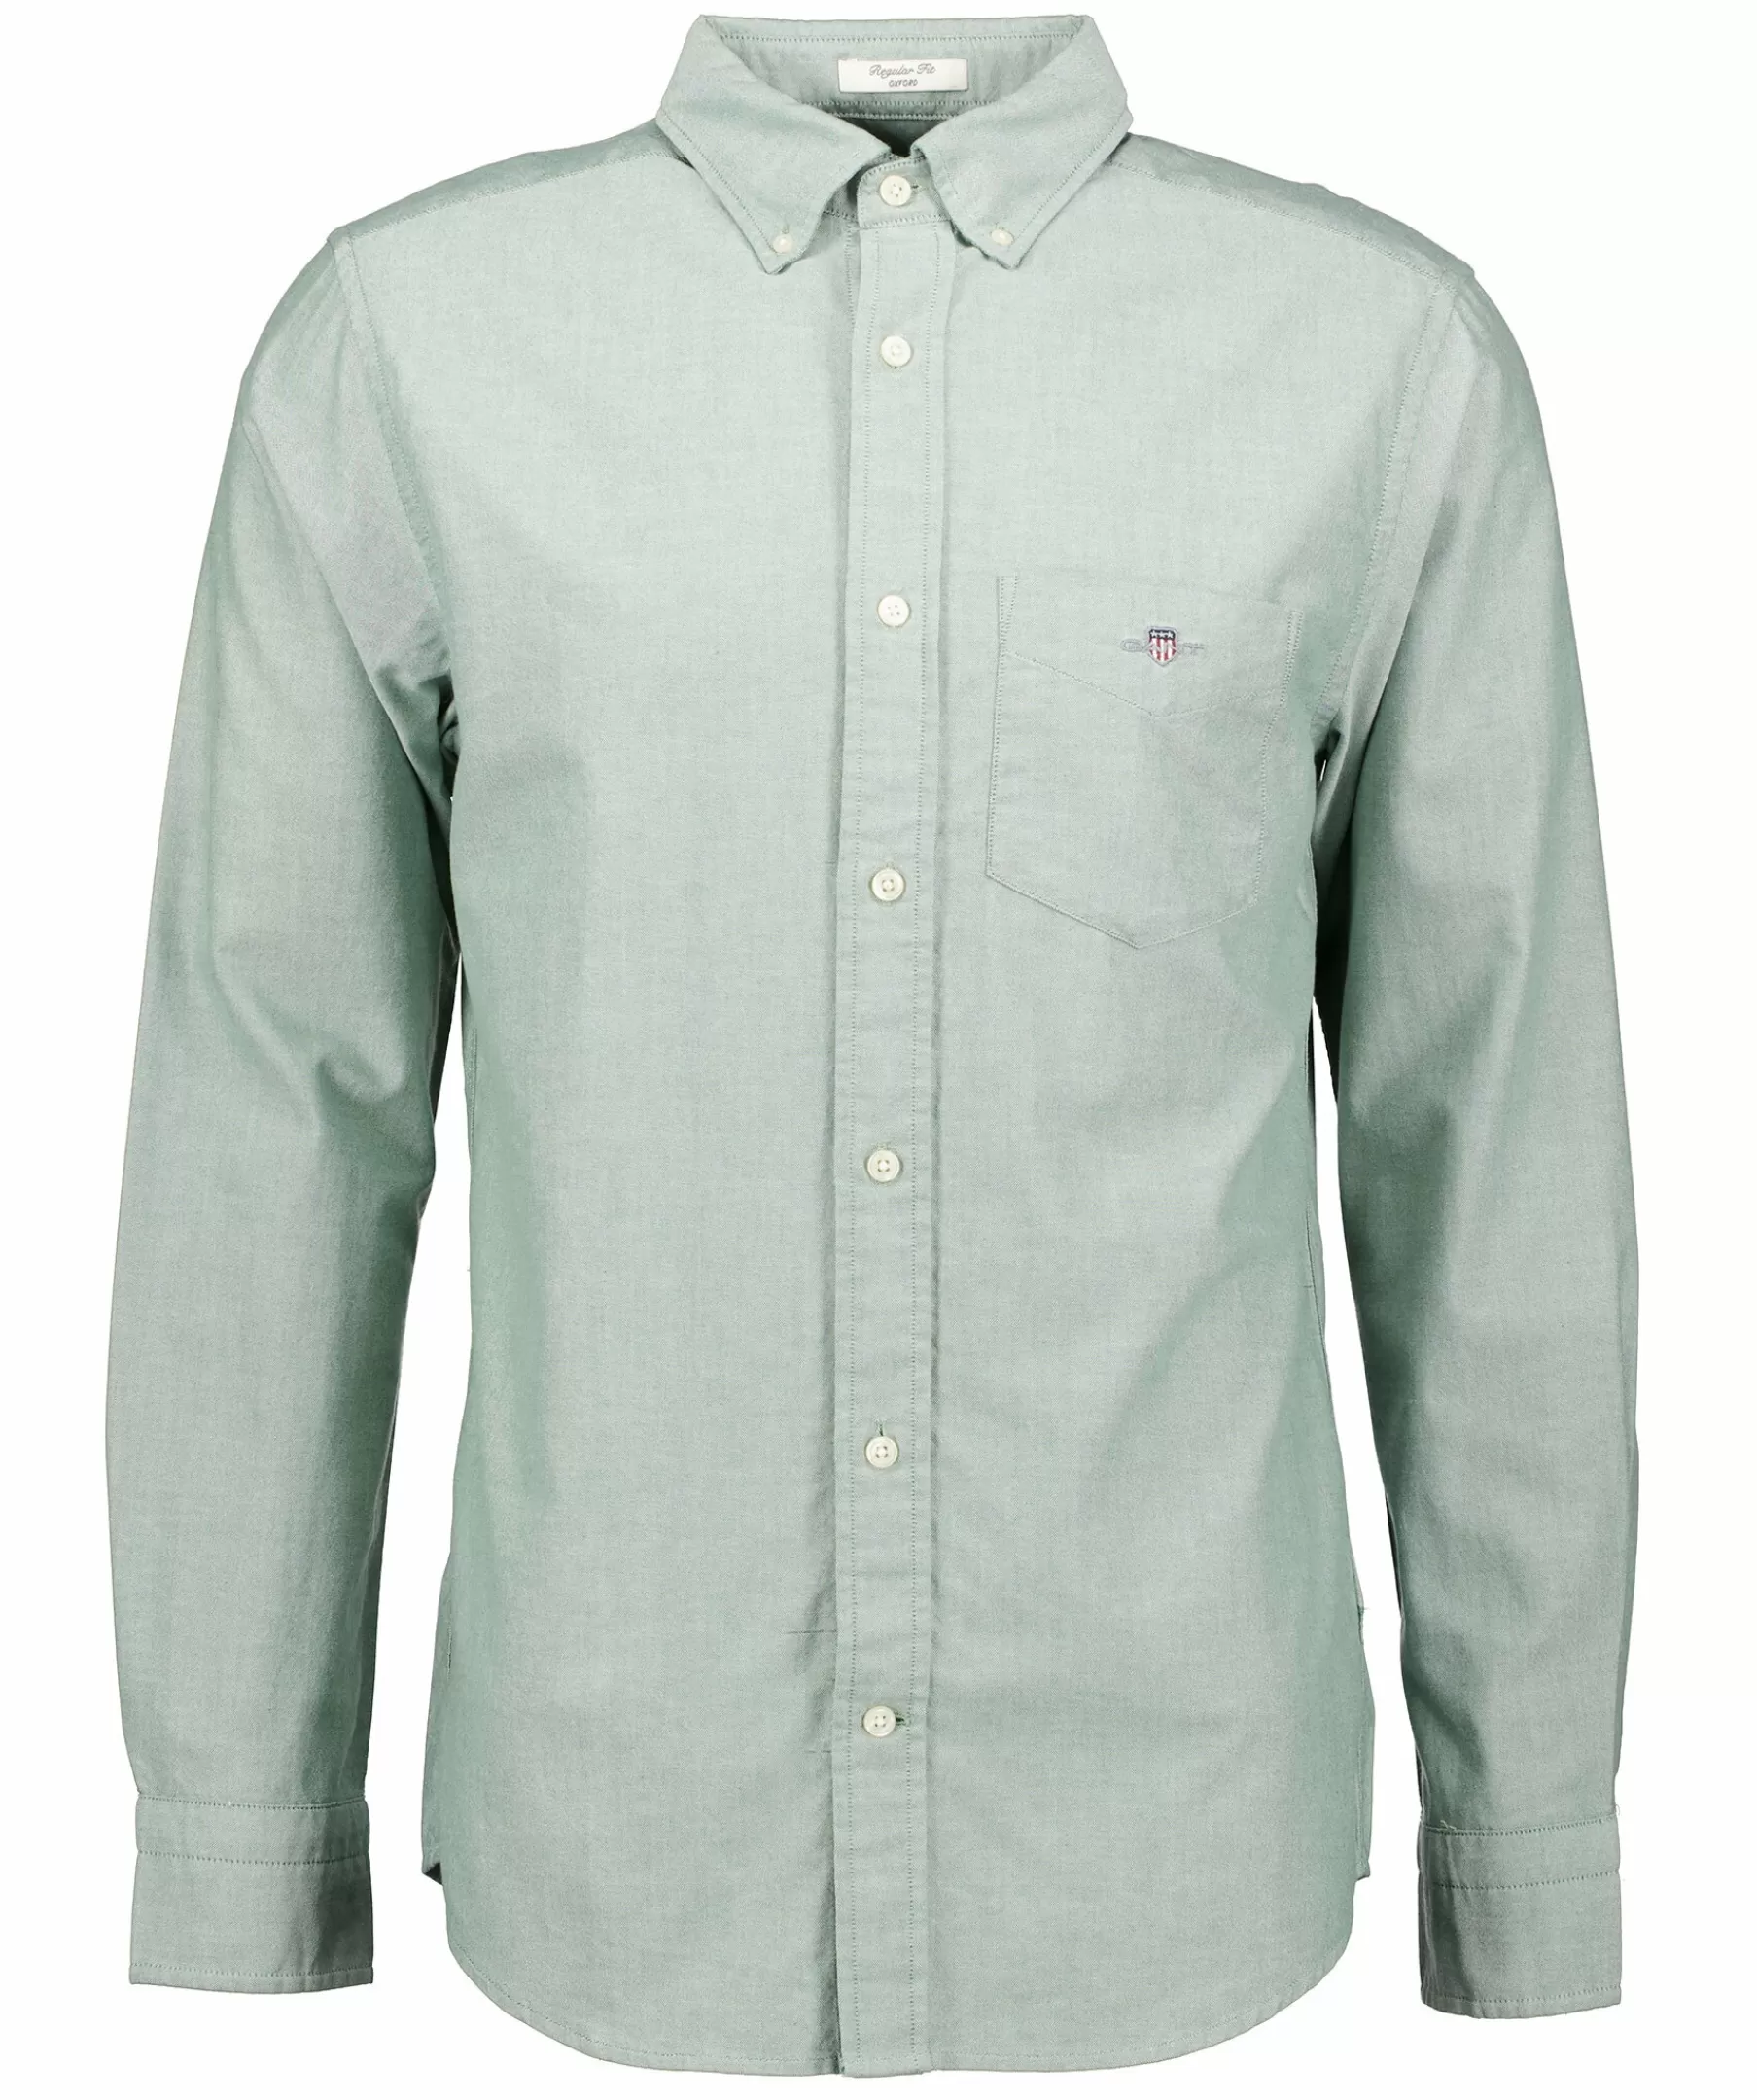 Reg Oxford Shirt^Gant Shop